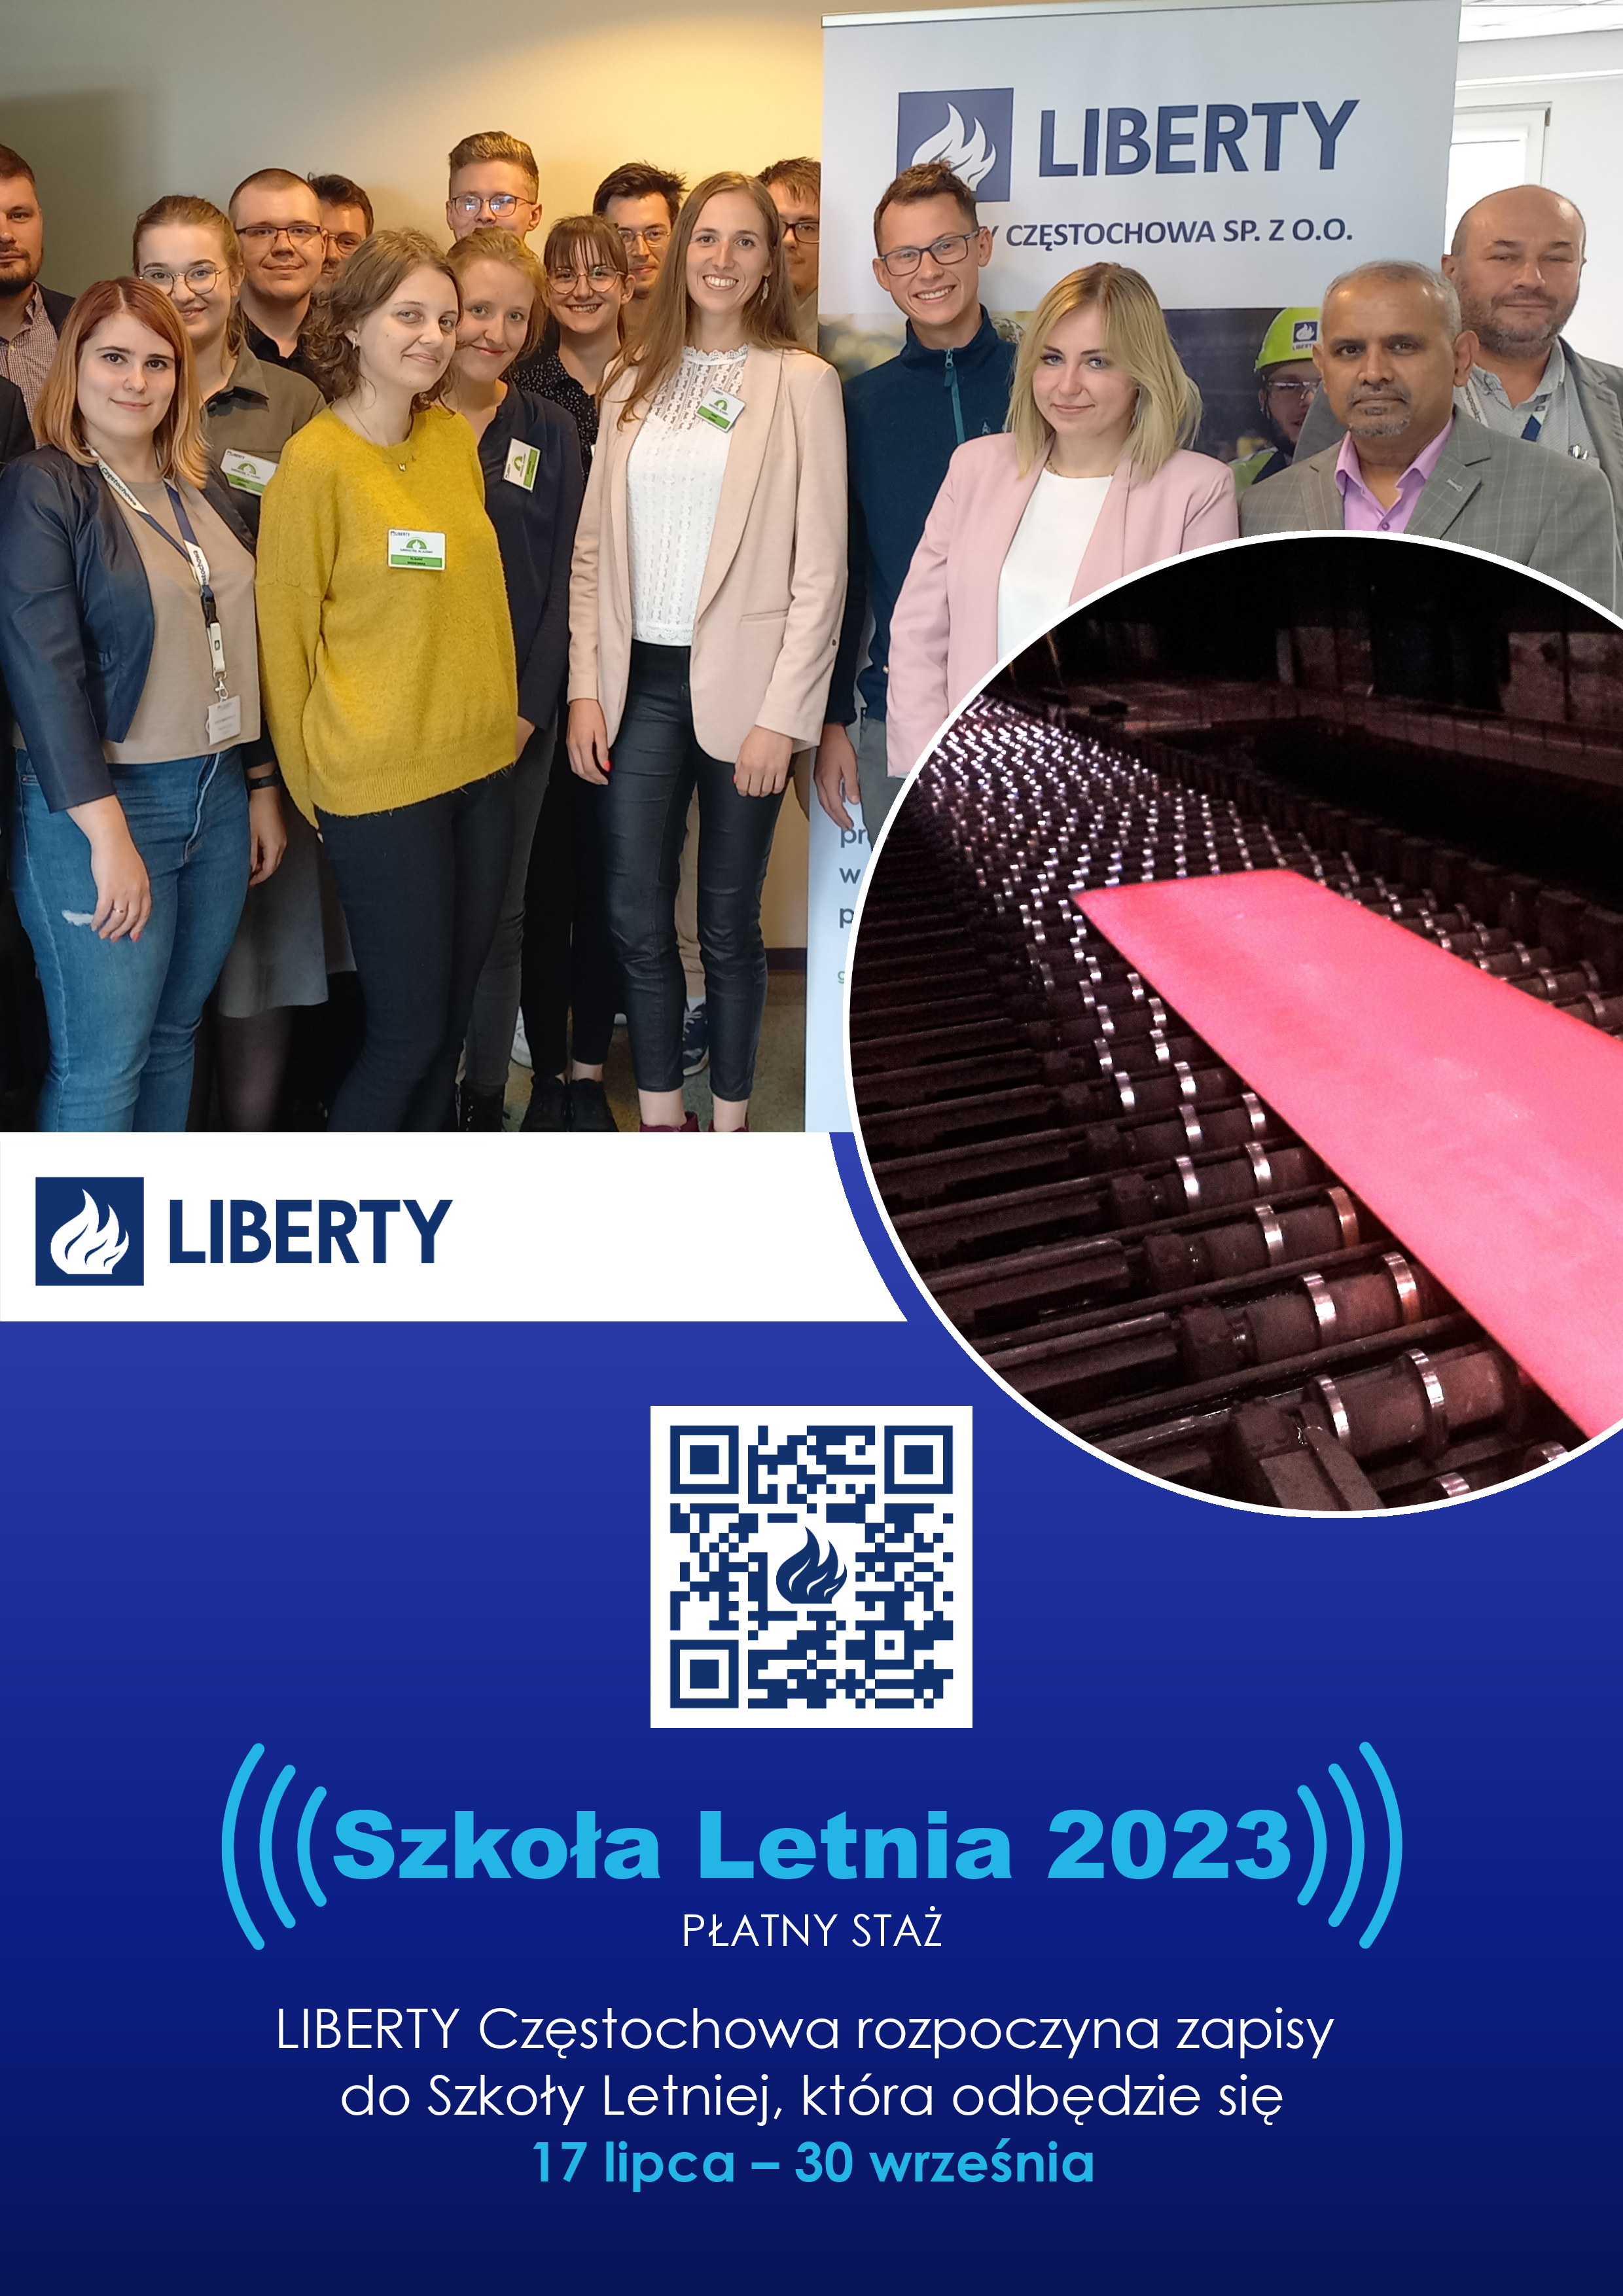 LIBERTY Częstochowa launches first Summer School for graduates